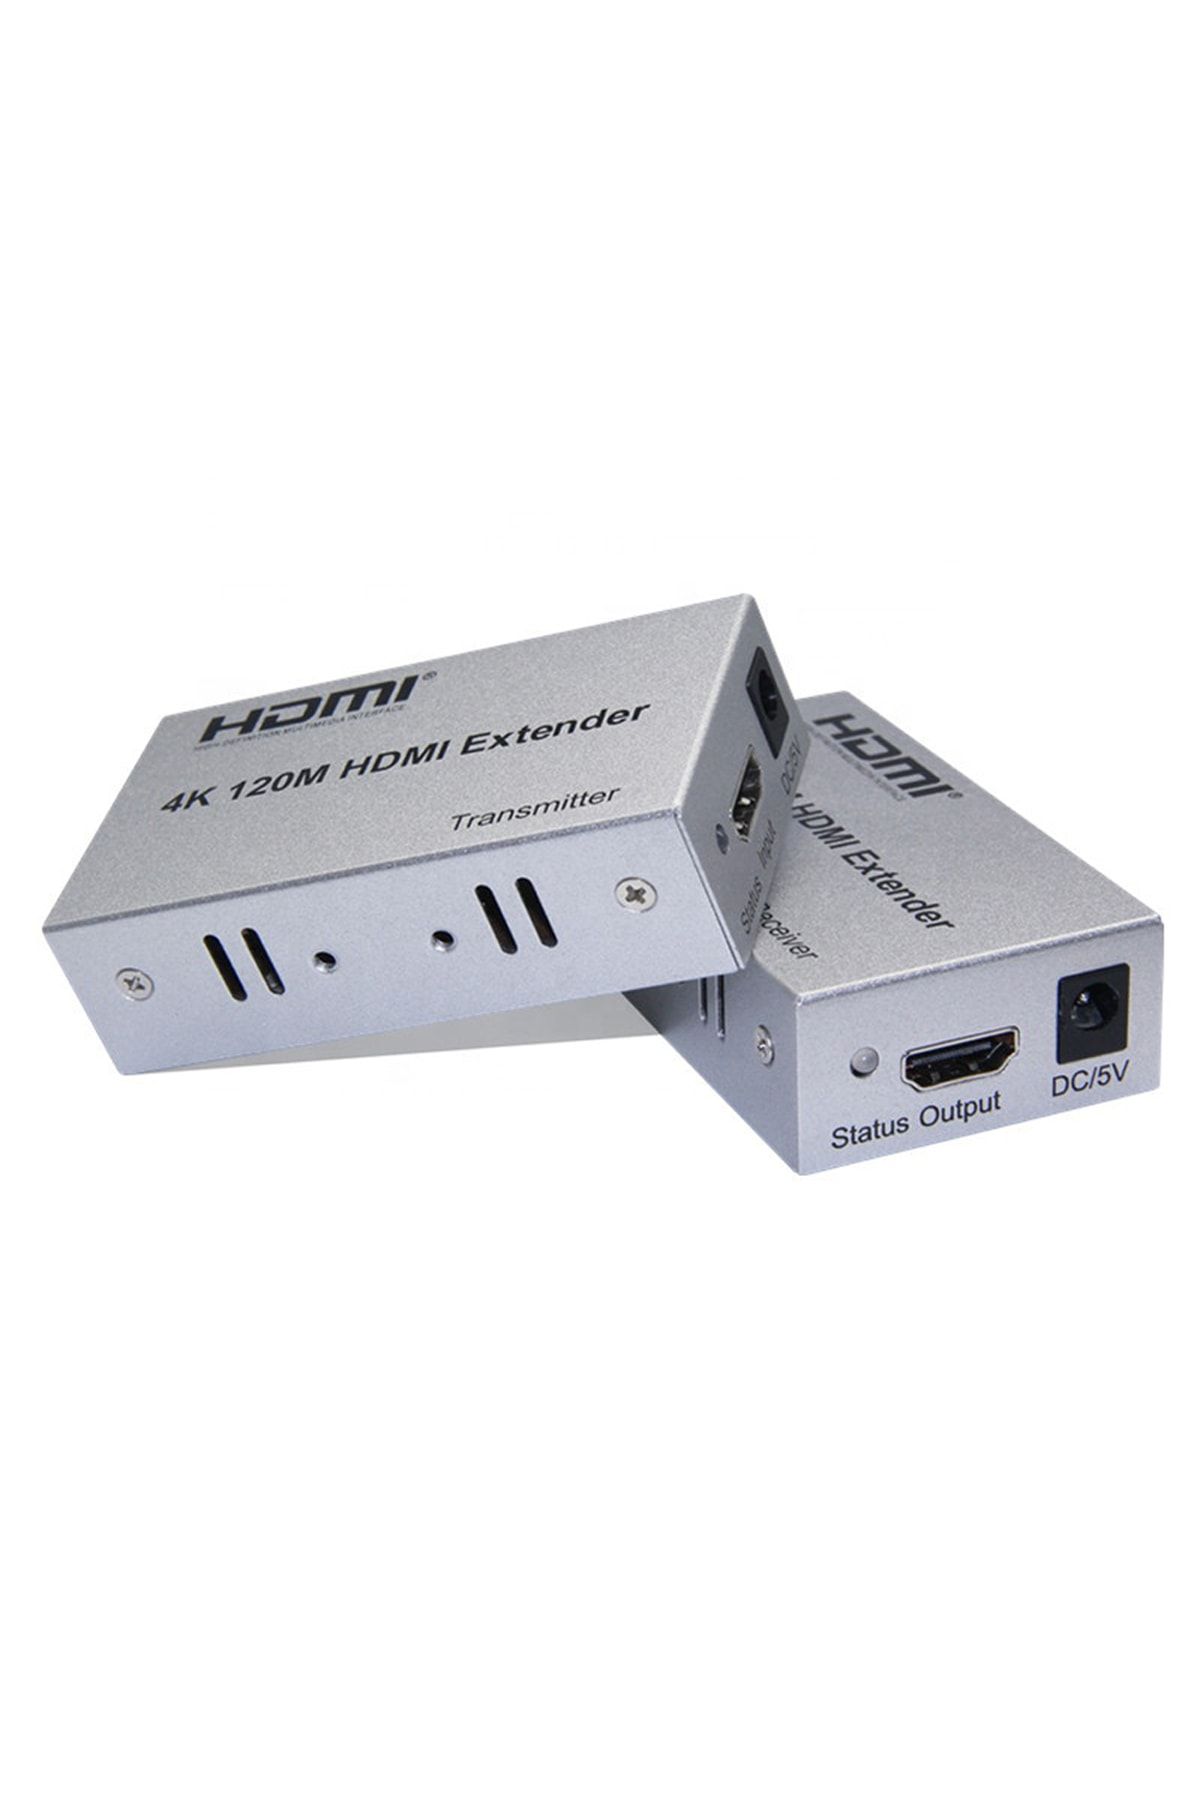 Gplus 4k120ex 120 Metre 4k Hdmı Extender Alıcı Verici Tx Rx Cat5e/6 Ethernet Transmitter Receiver